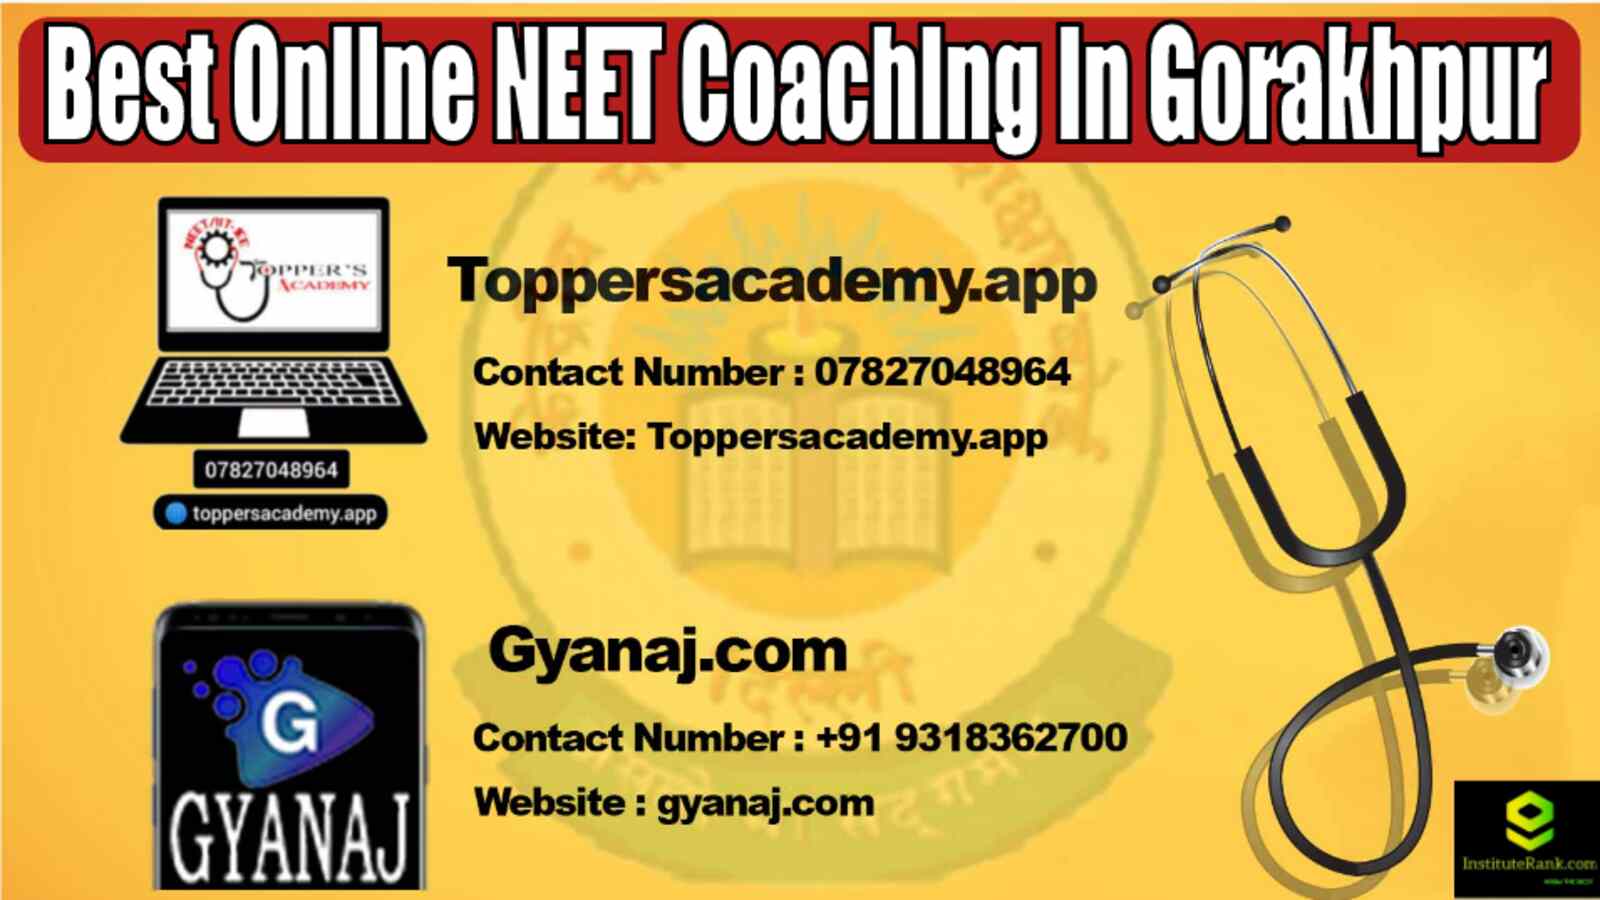 Best Online NEET Coaching in Gorakhpur 2022